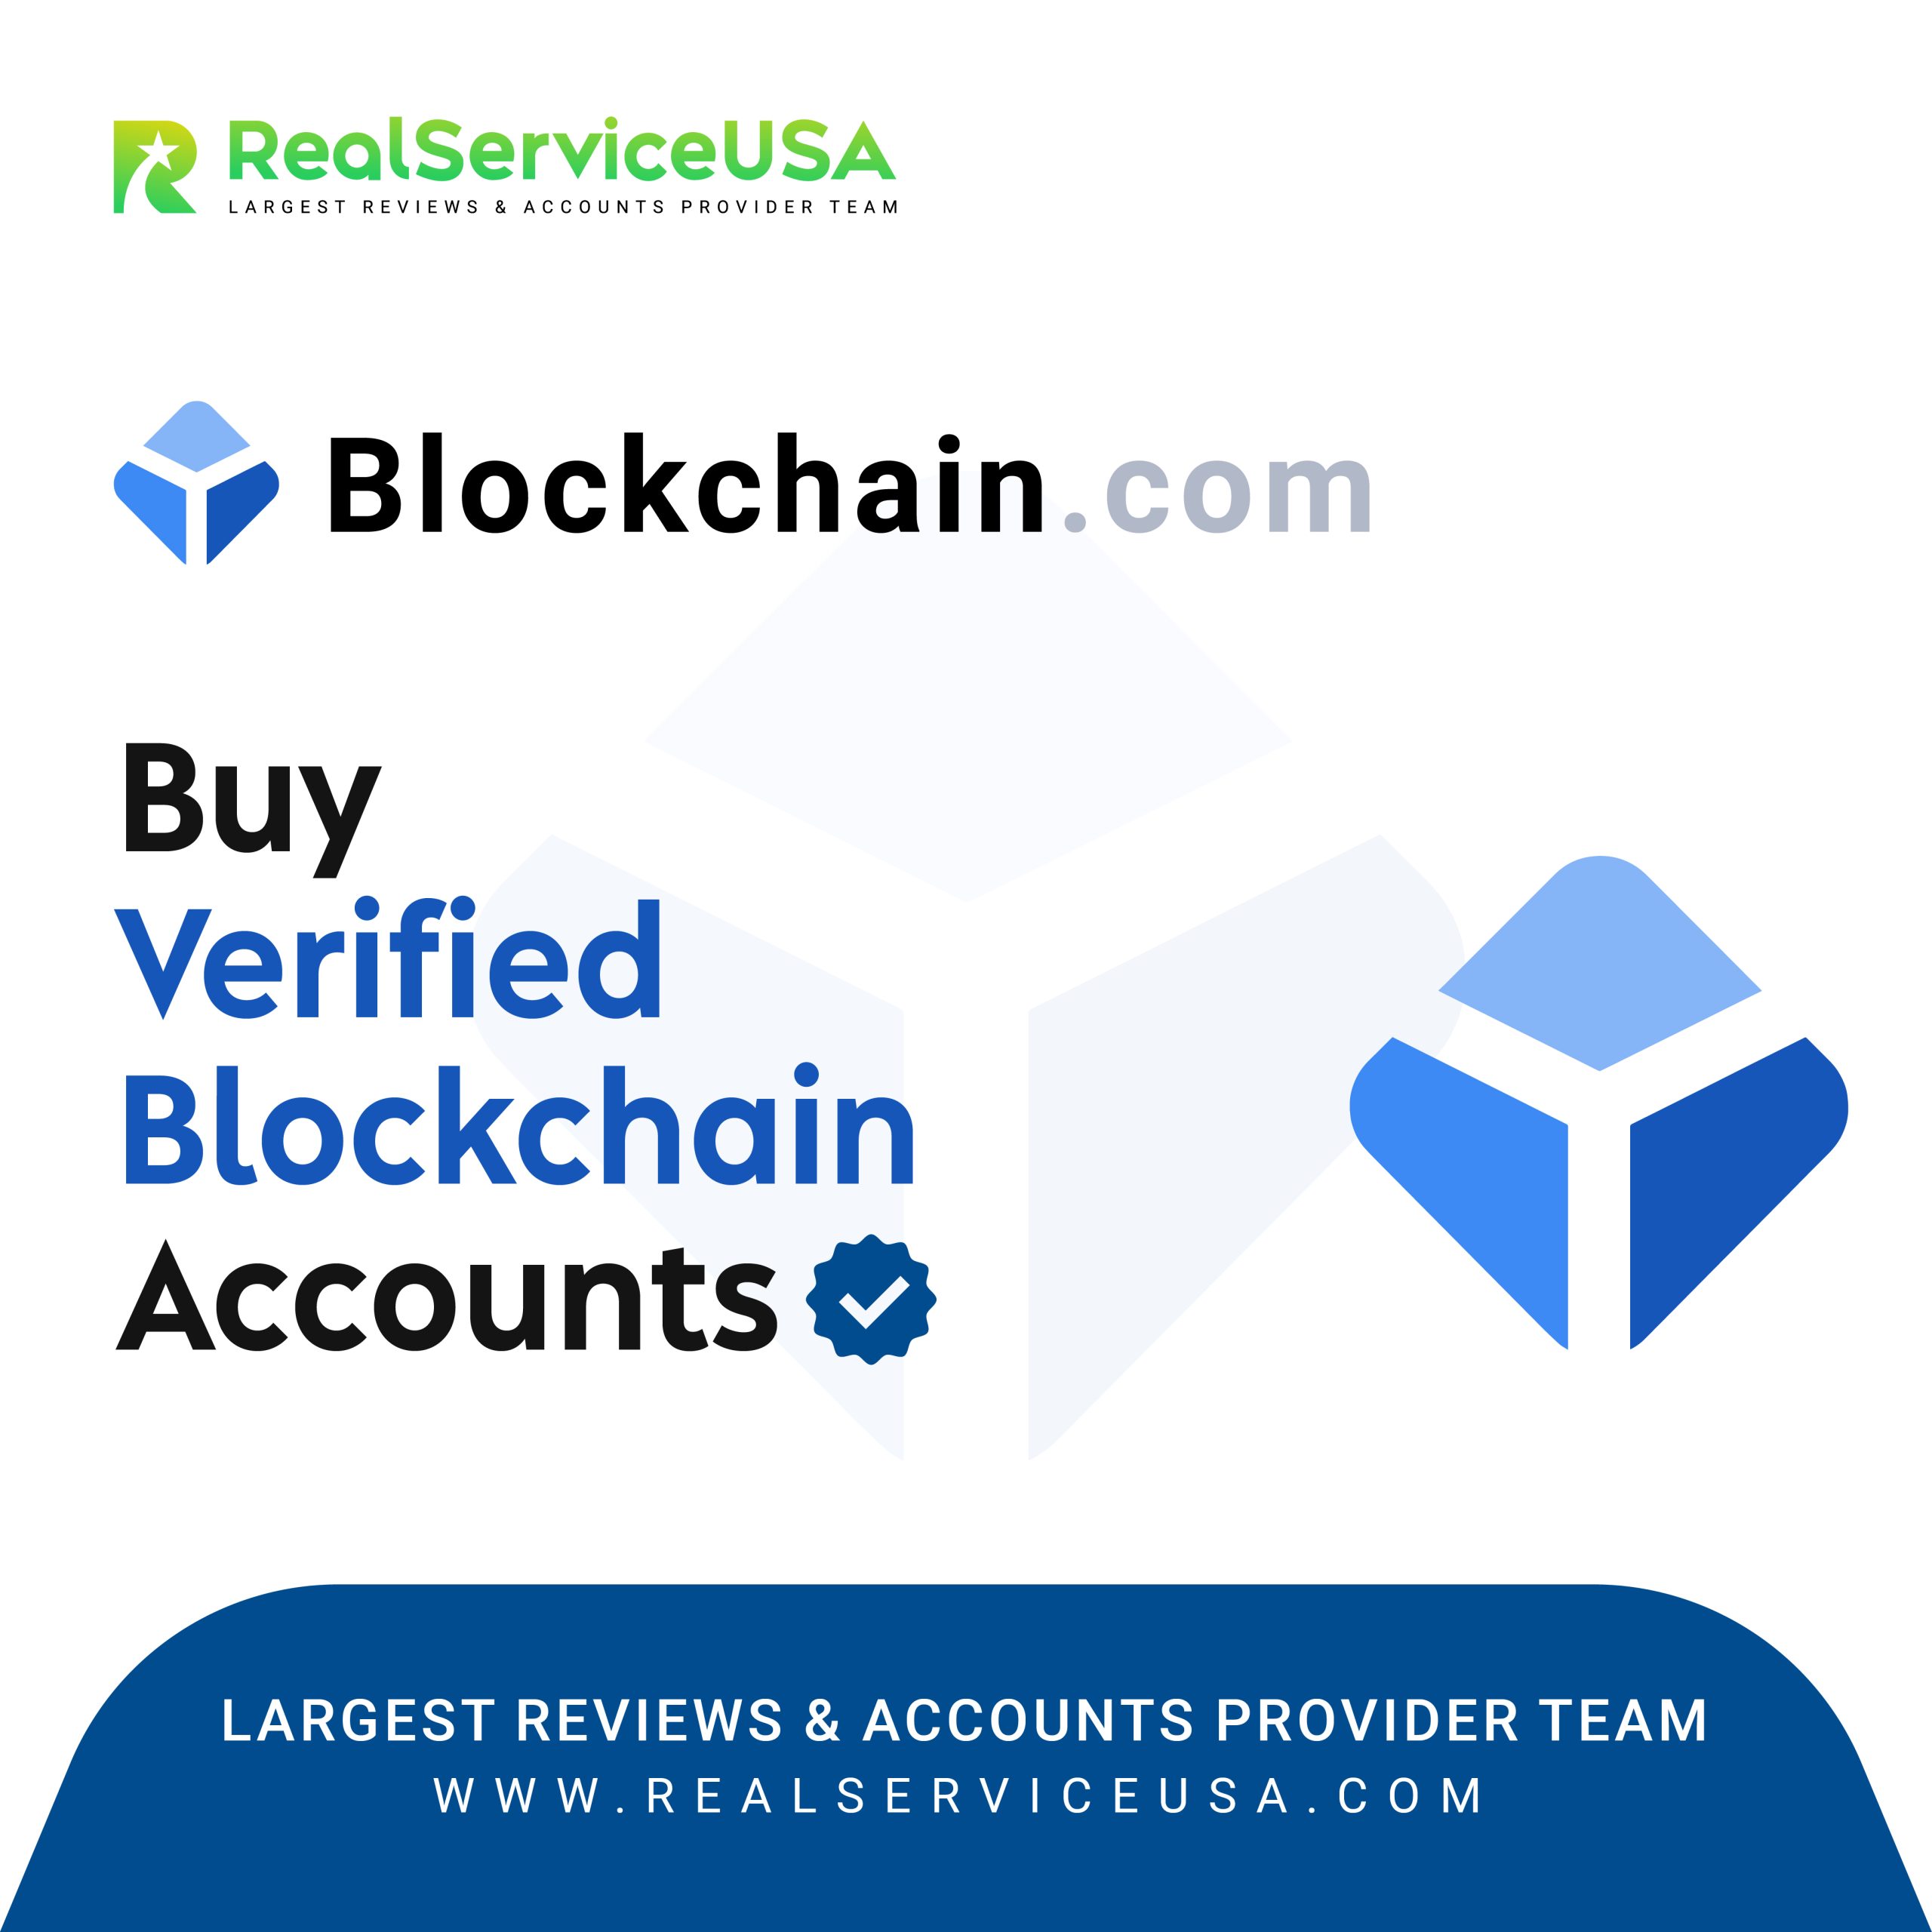 Verified Blockchain Accounts